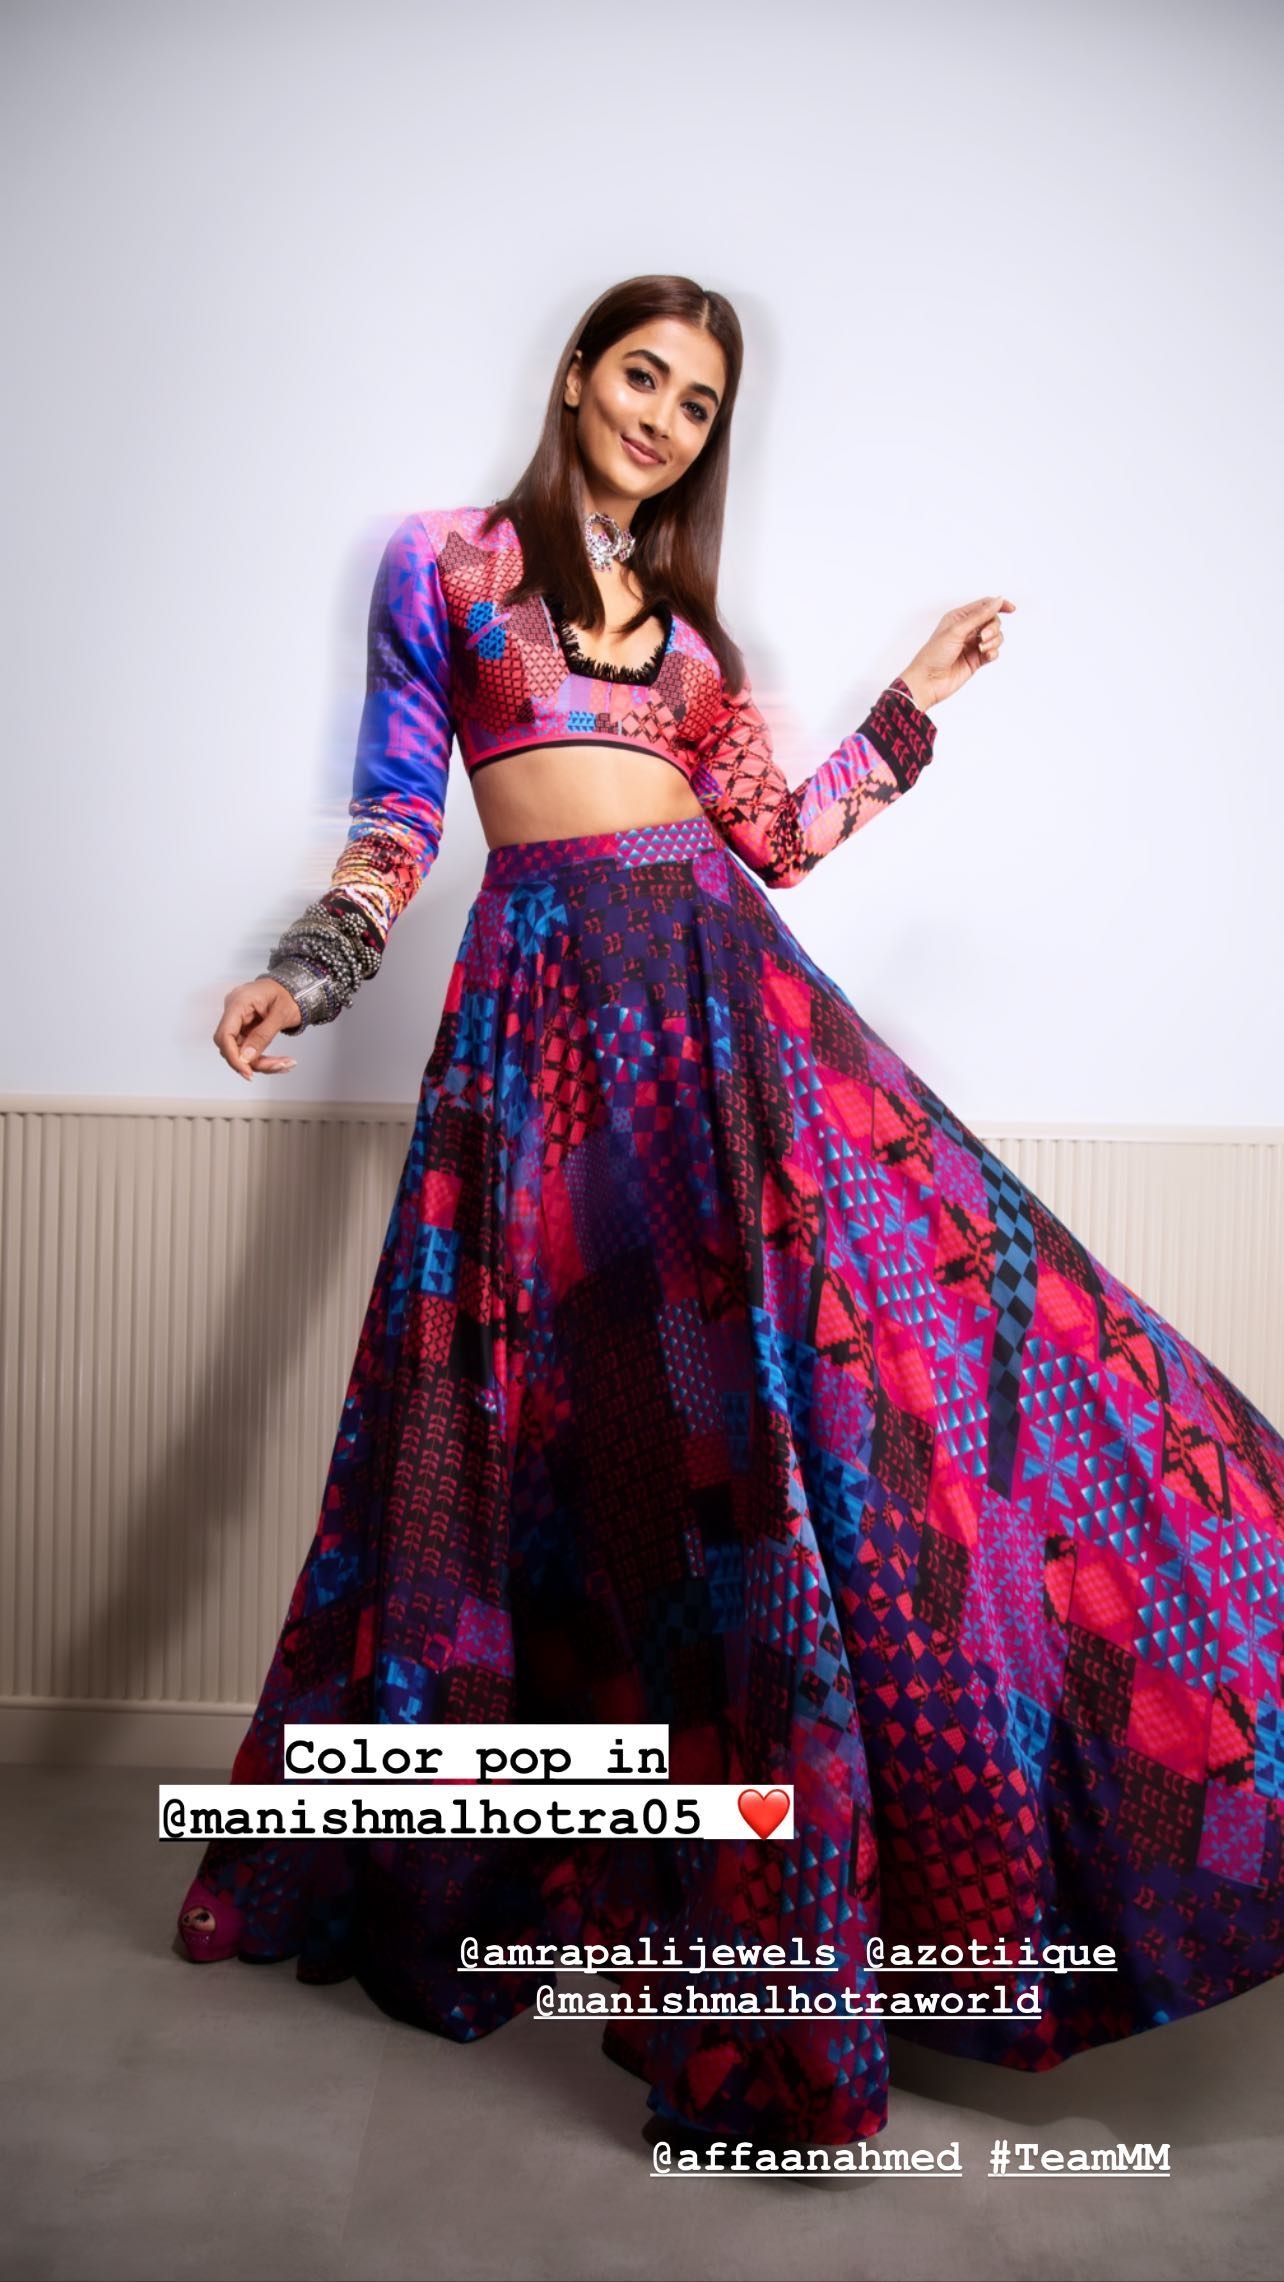 Pooja Hegde Xxx Im - PICS - Pooja Hegde Hot Waist Revealing Colorful Lehenga is